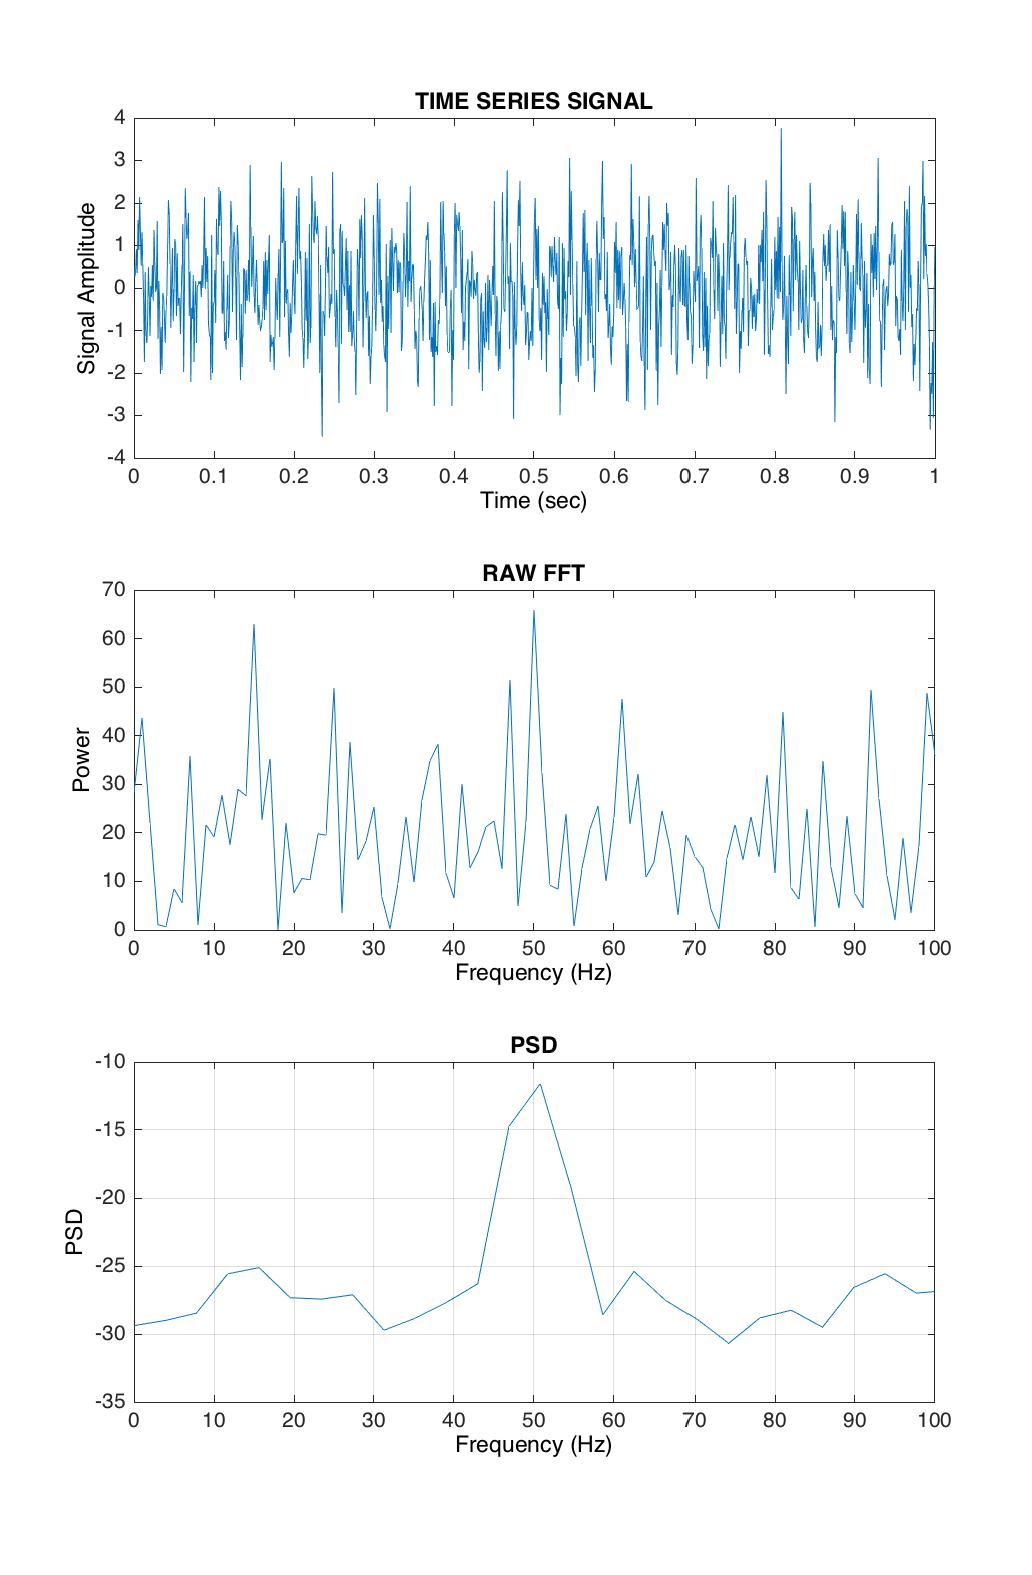 Figure 6: Power spectral density of a 50 Hz signal.